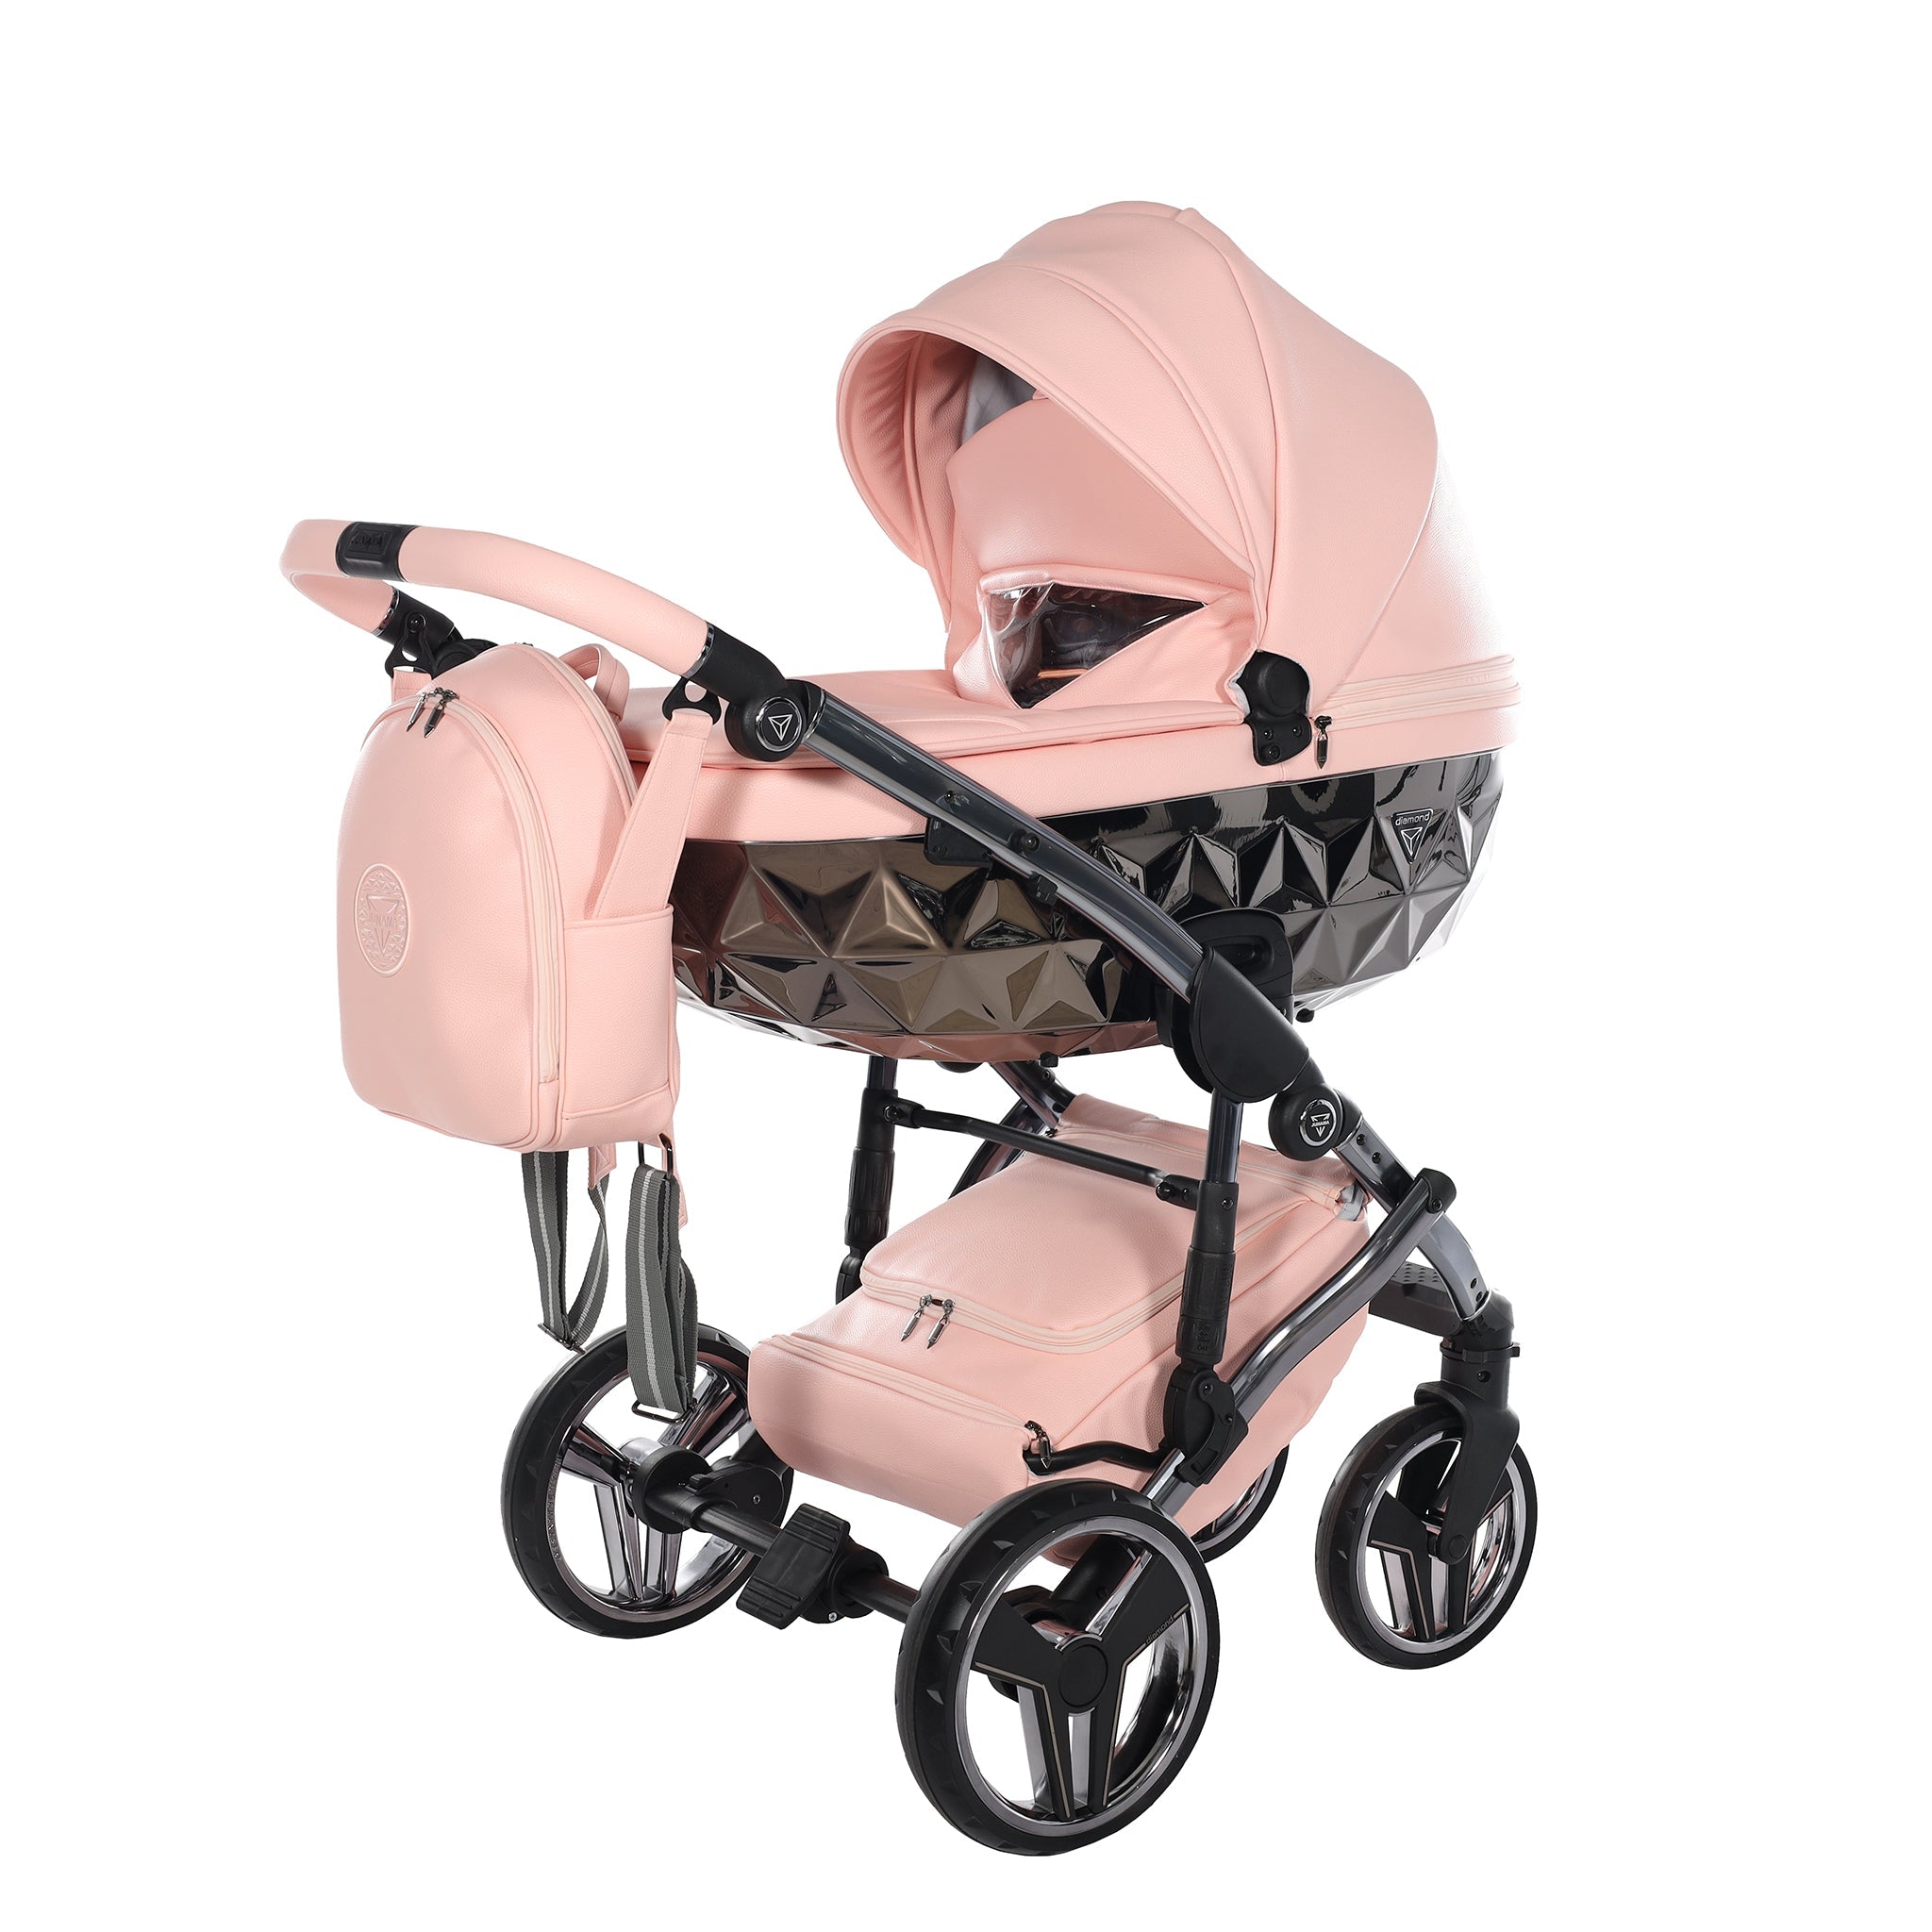 Junama Handcraft, baby prams or stroller 2 in 1 - Apricot color, Code number: JUNHC02